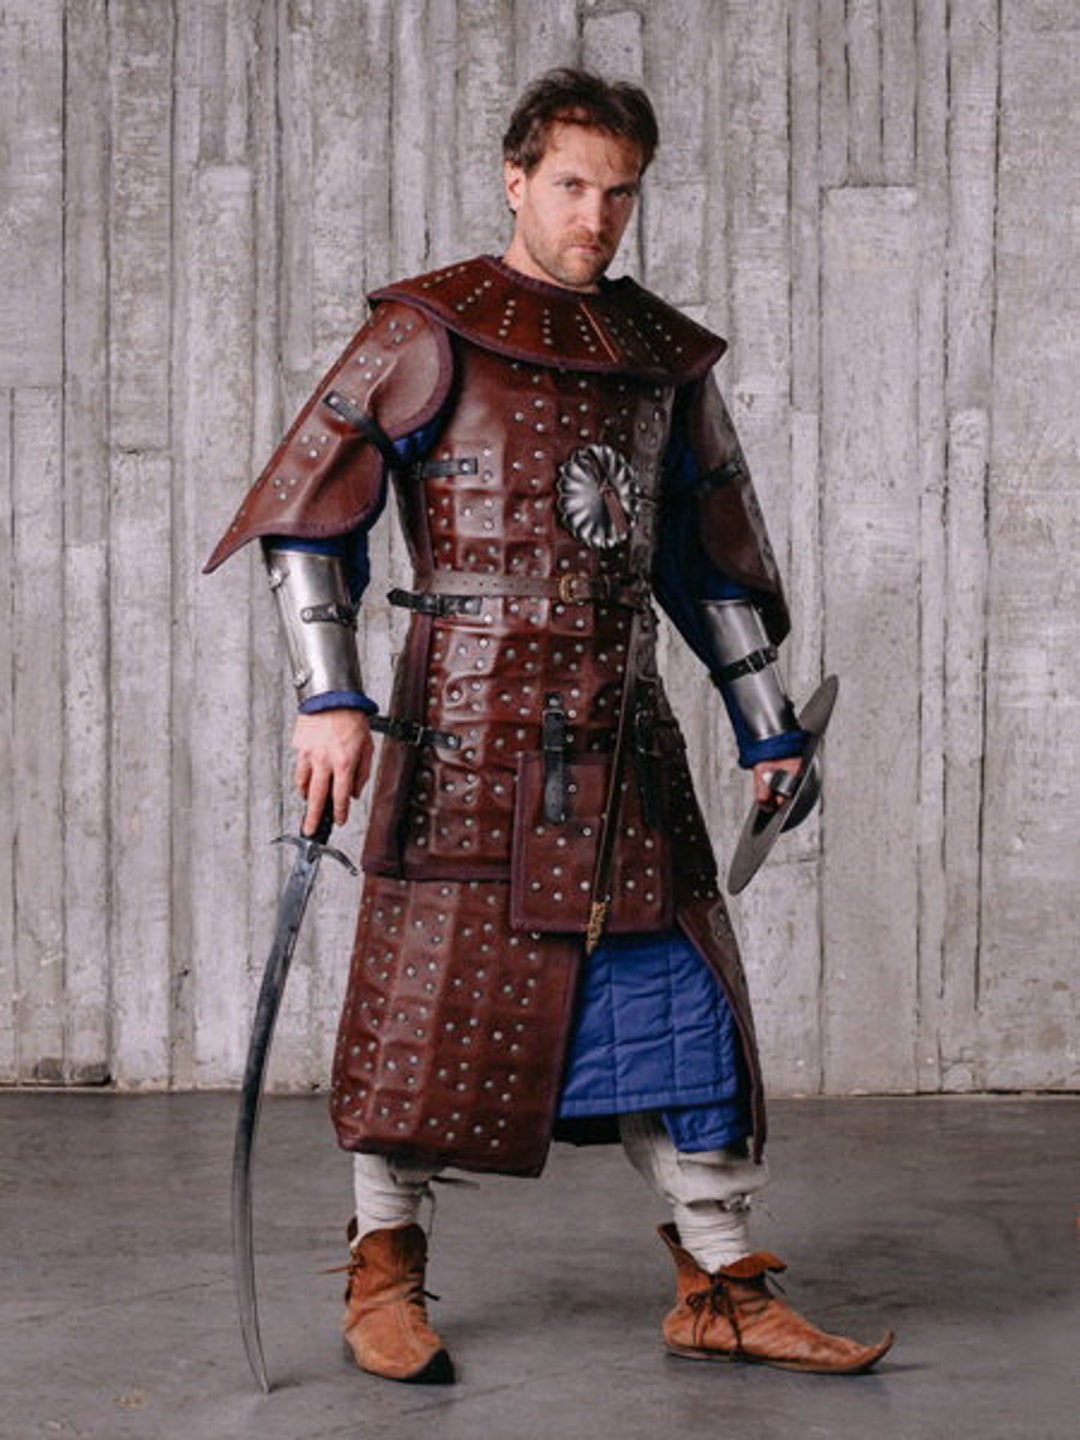 17th century warrior cosplay